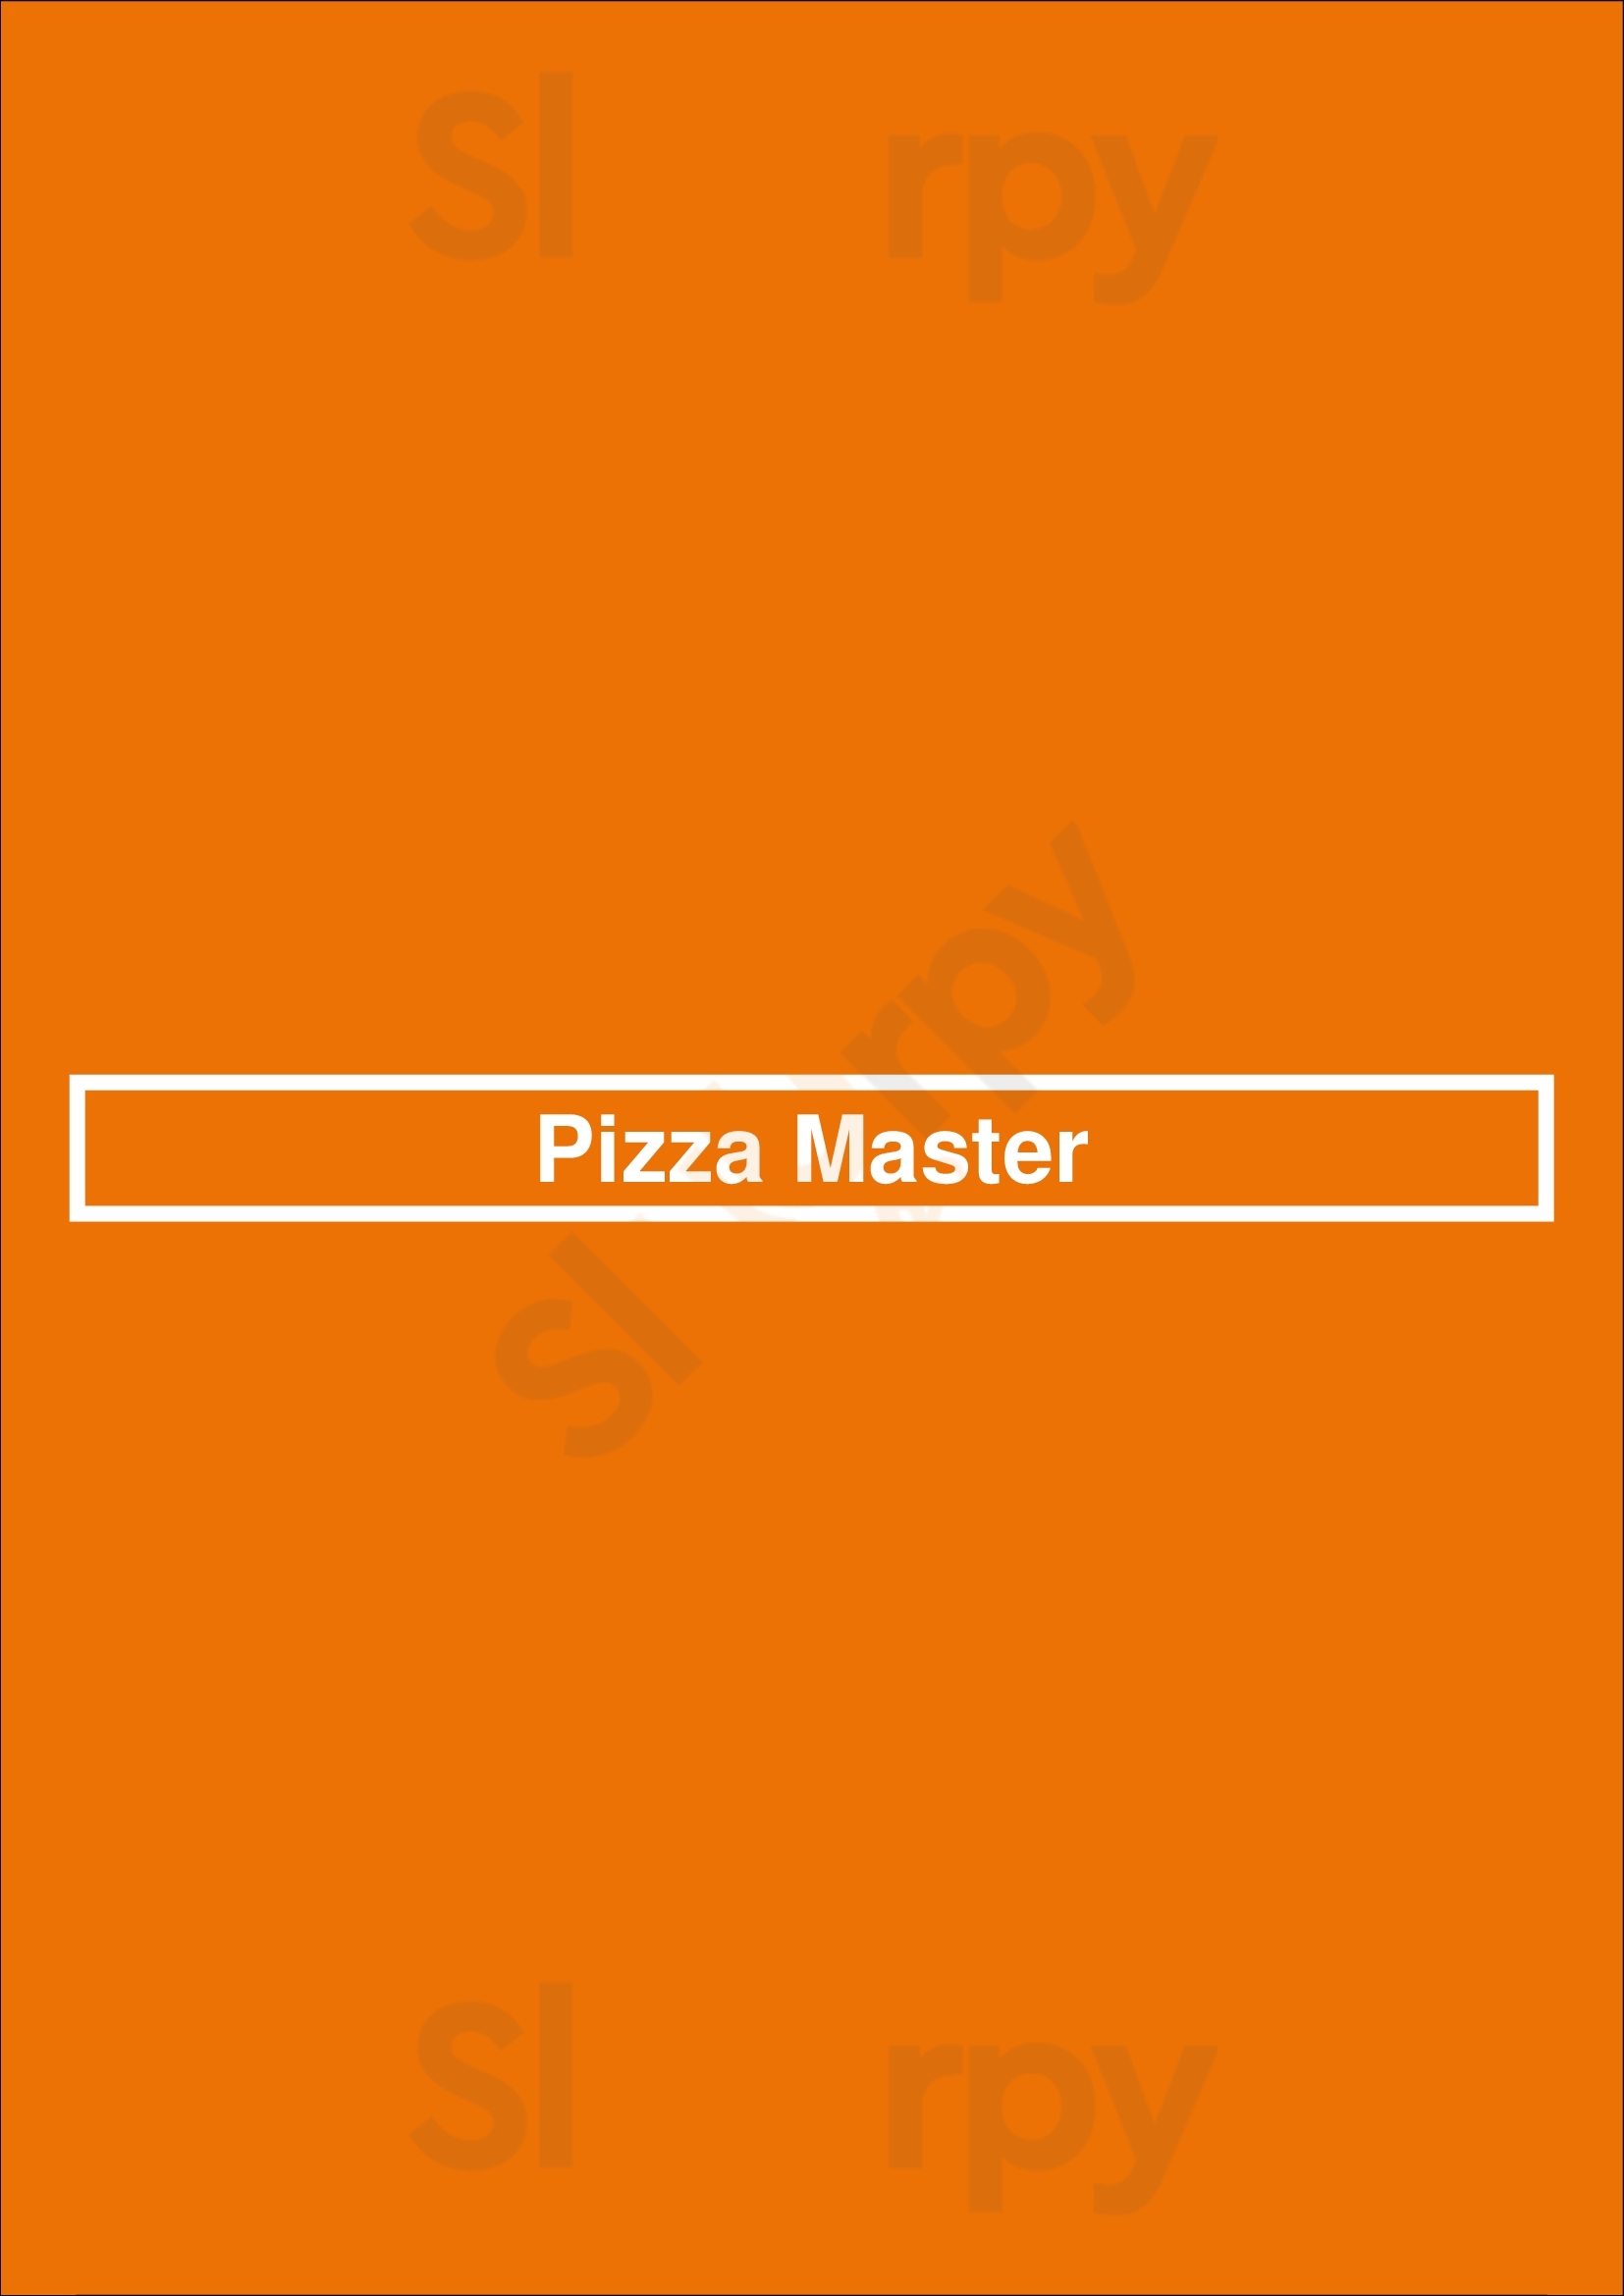 Pizza Master Rotherham Menu - 1